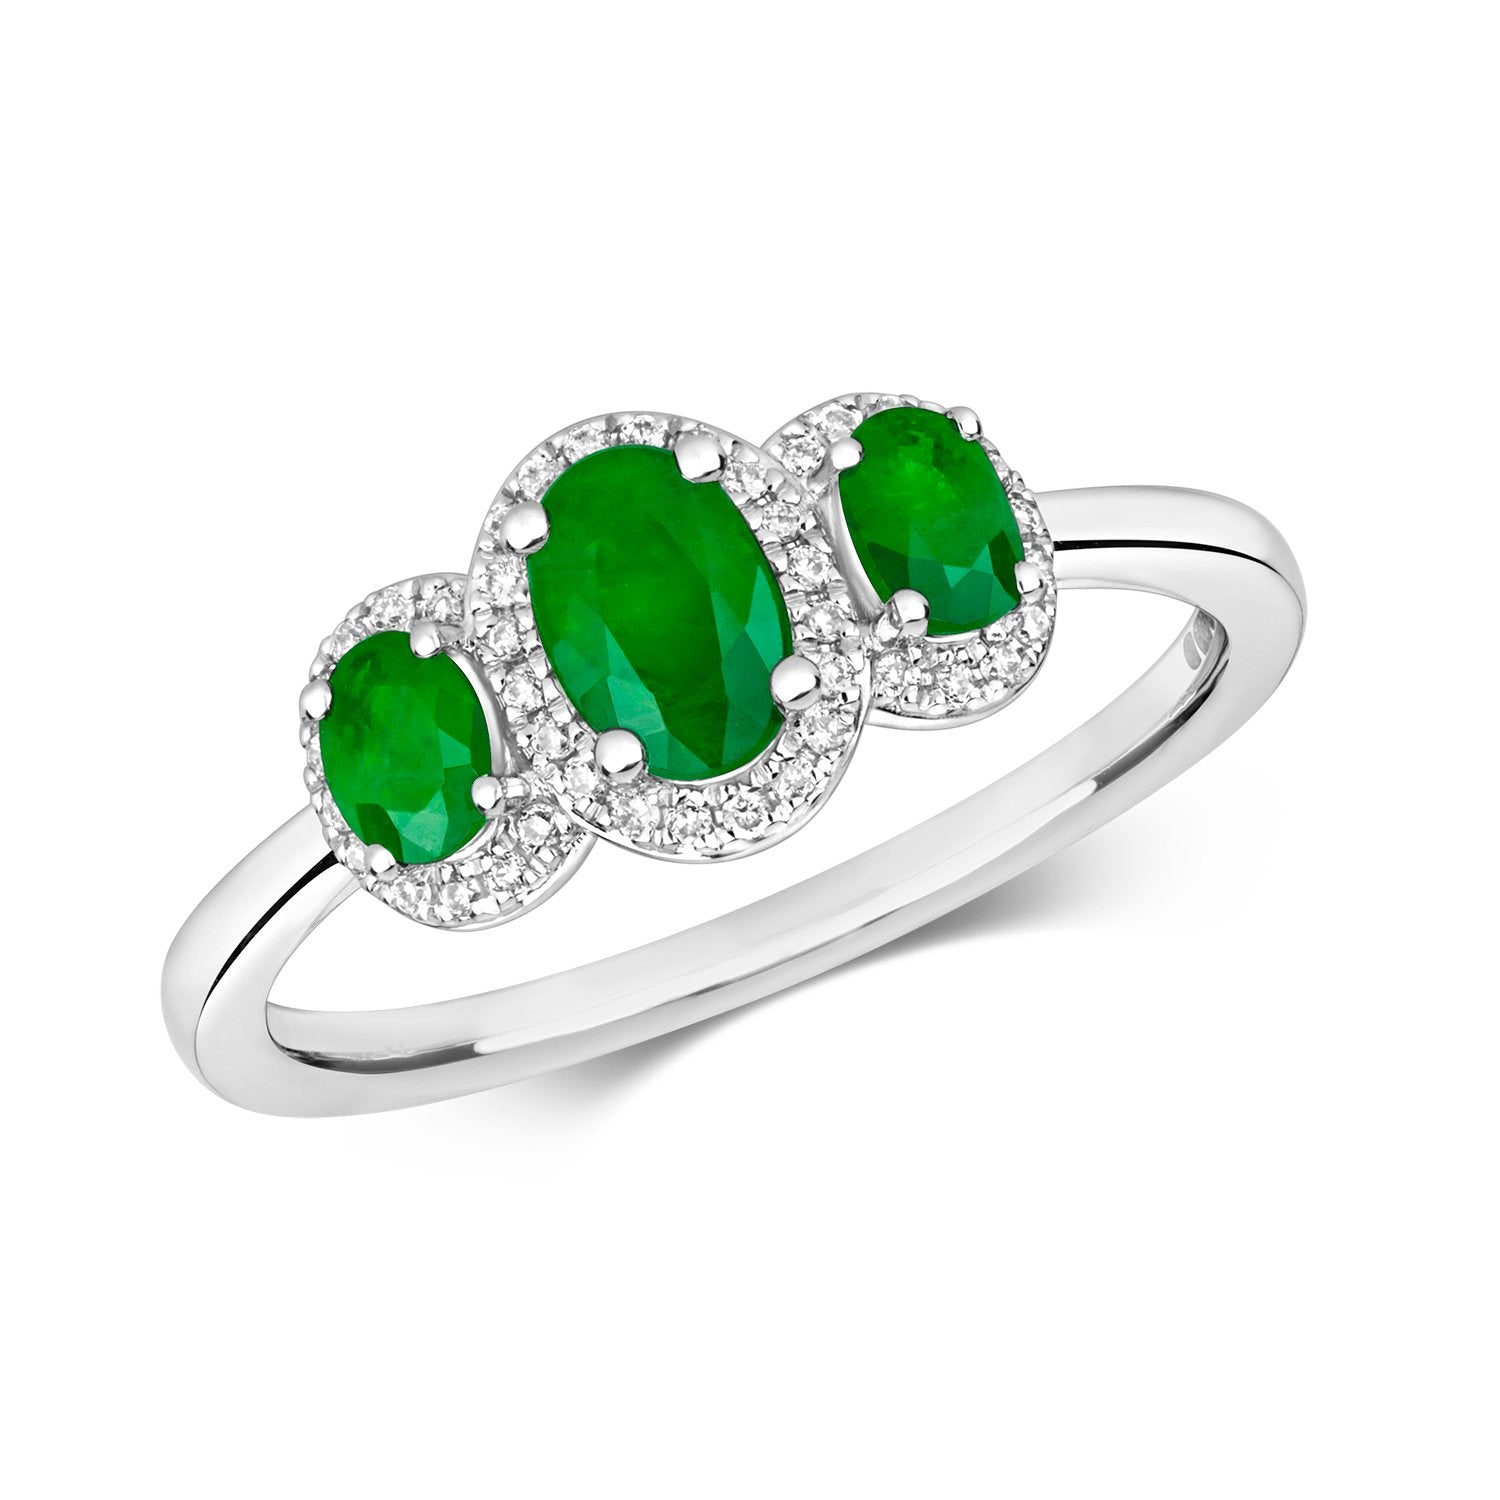 Emerald & Diamond Three Stone Ring (Rd423we)